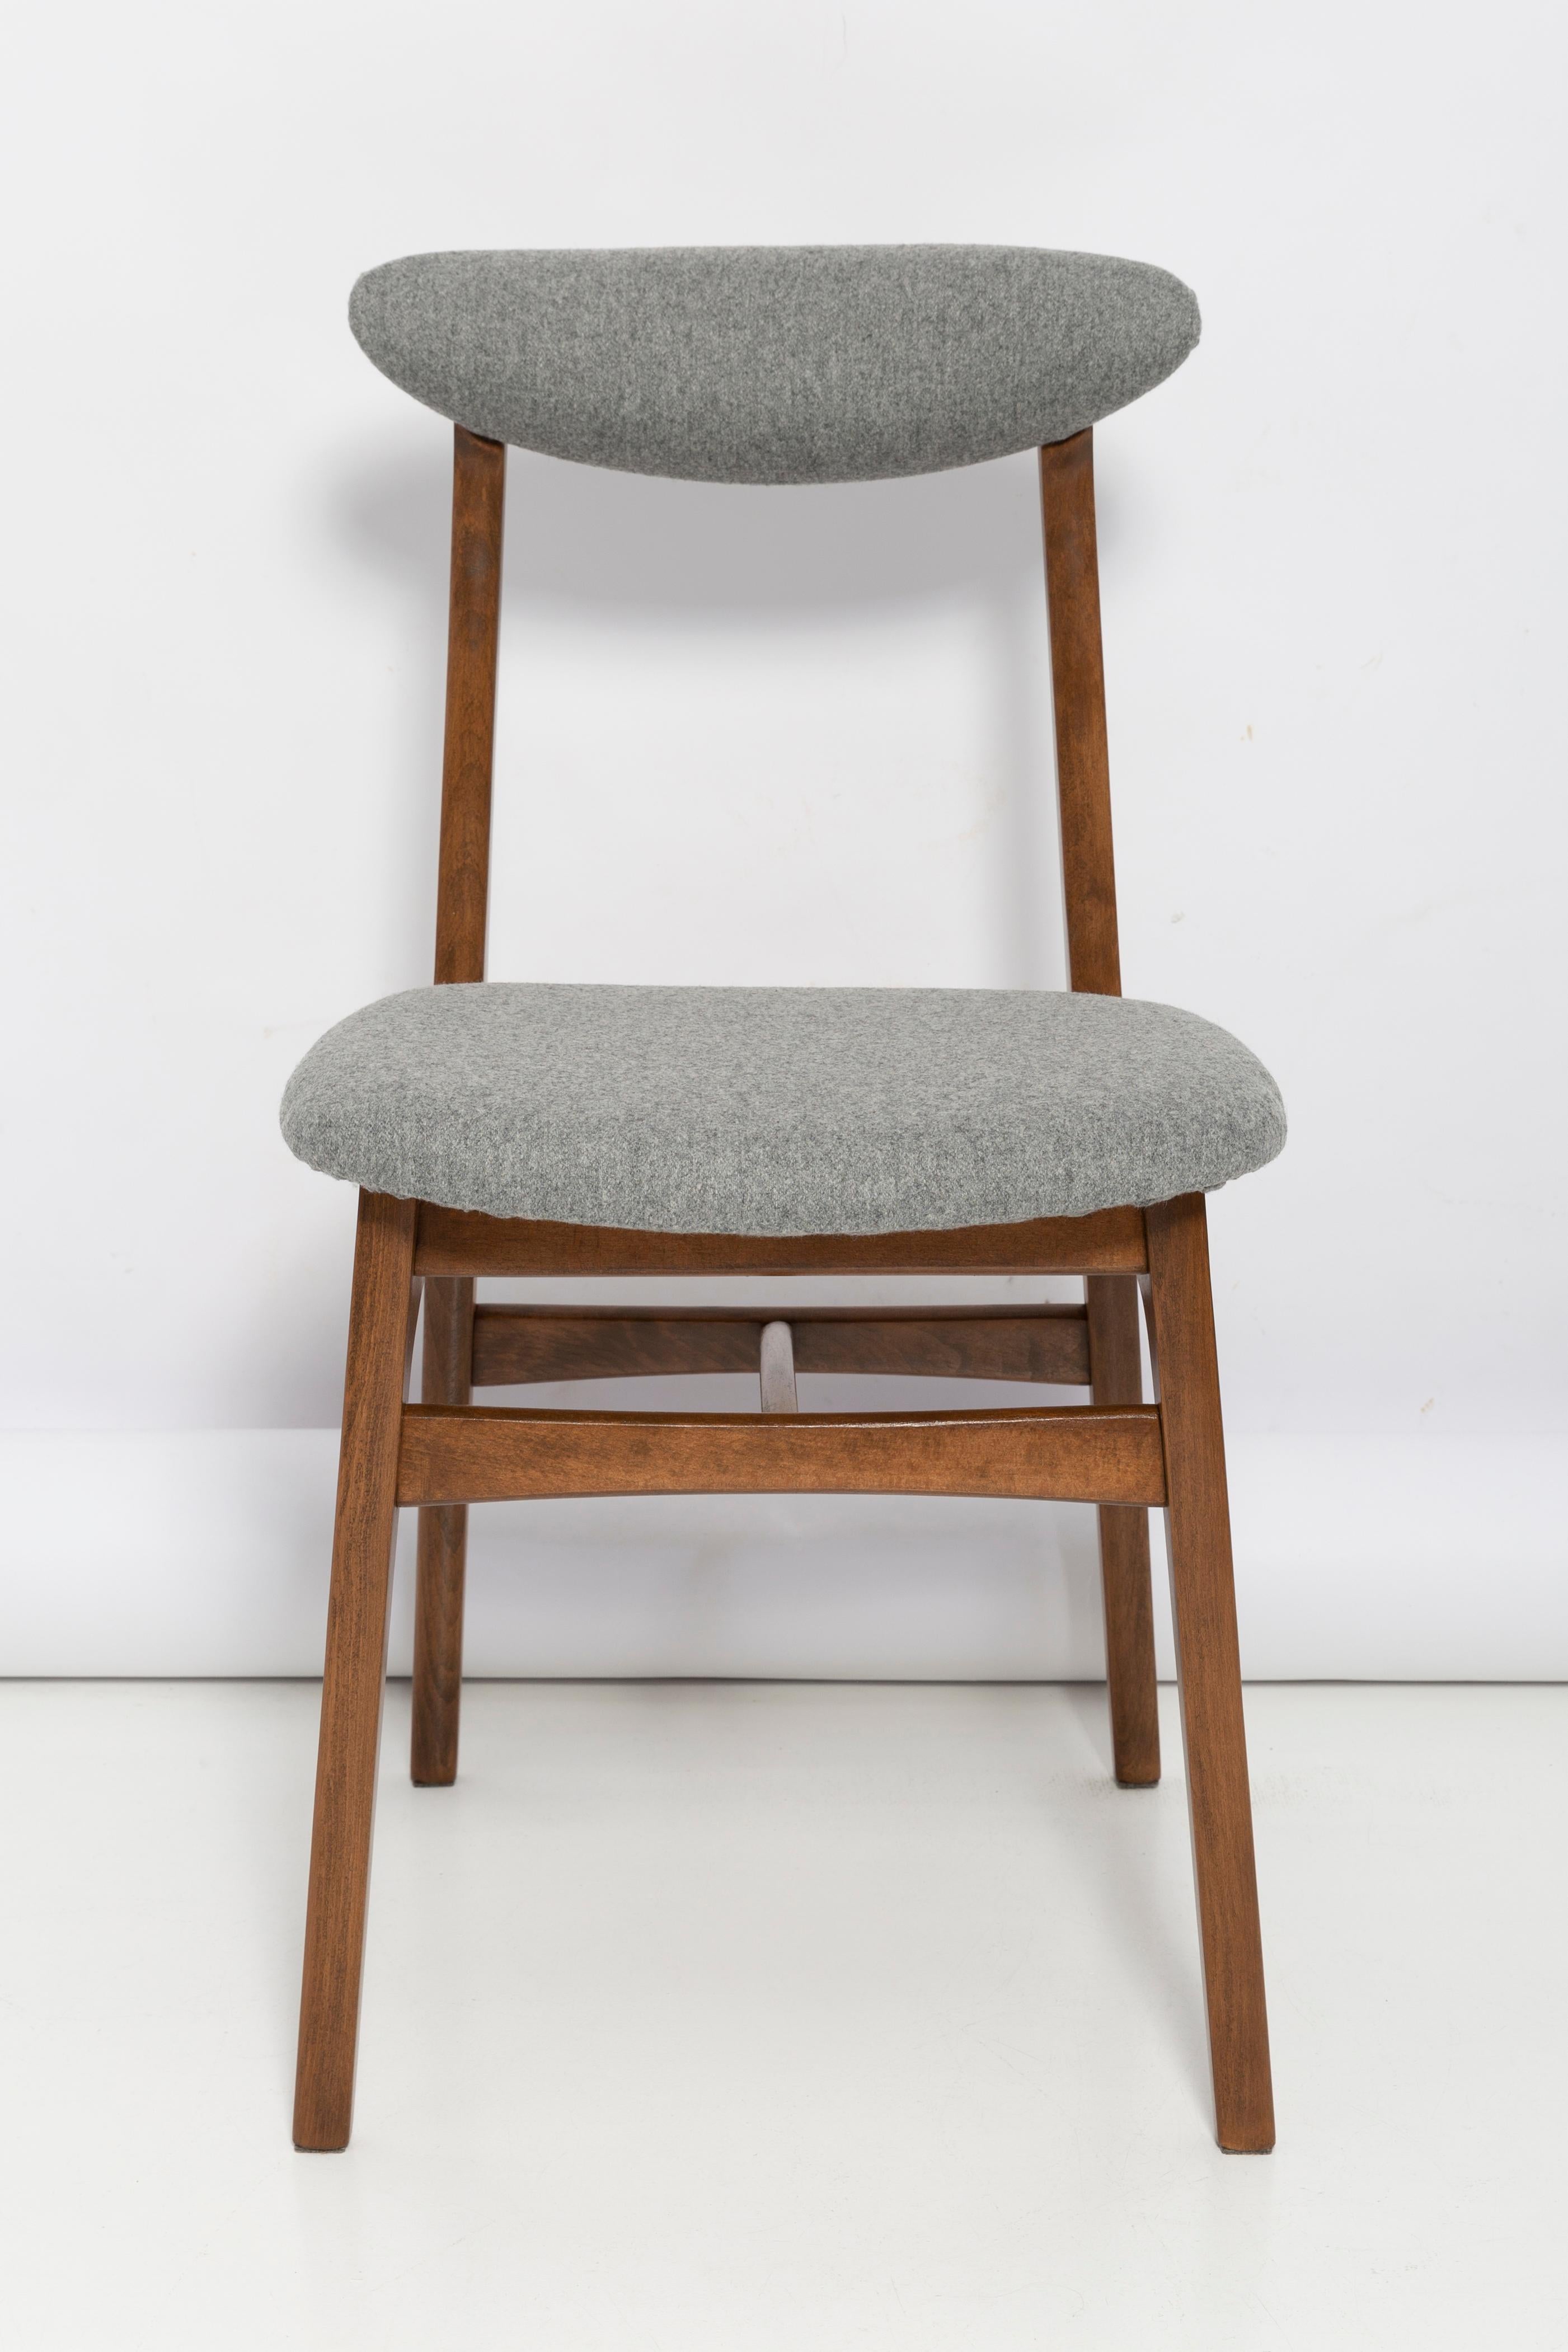 Mid Century Gray Wool Chair Designed by Rajmund Halas, Poland, 1960s For Sale 3